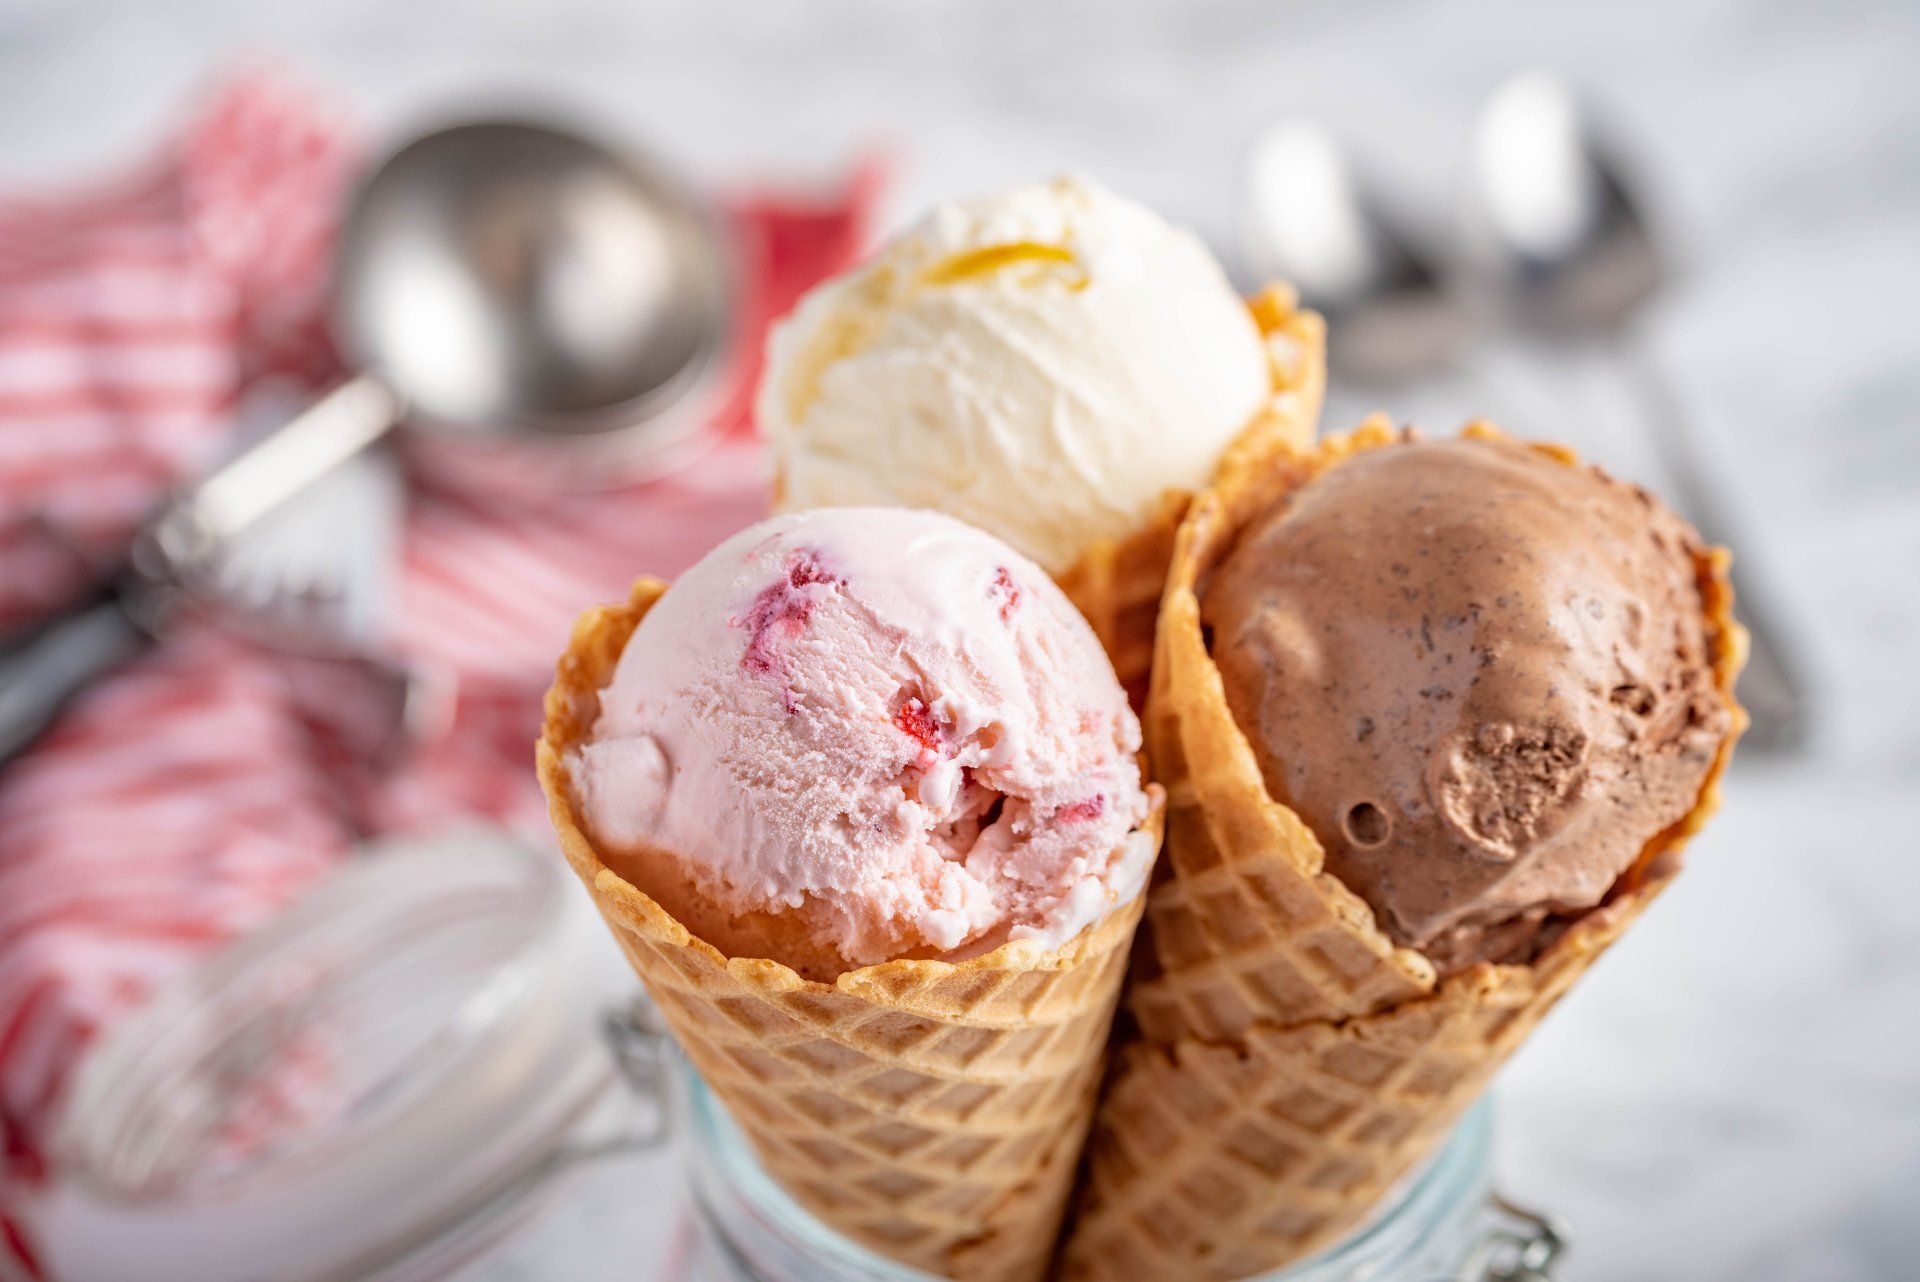 three ice cream cones with chocolate vanilla and strawberry ice cream